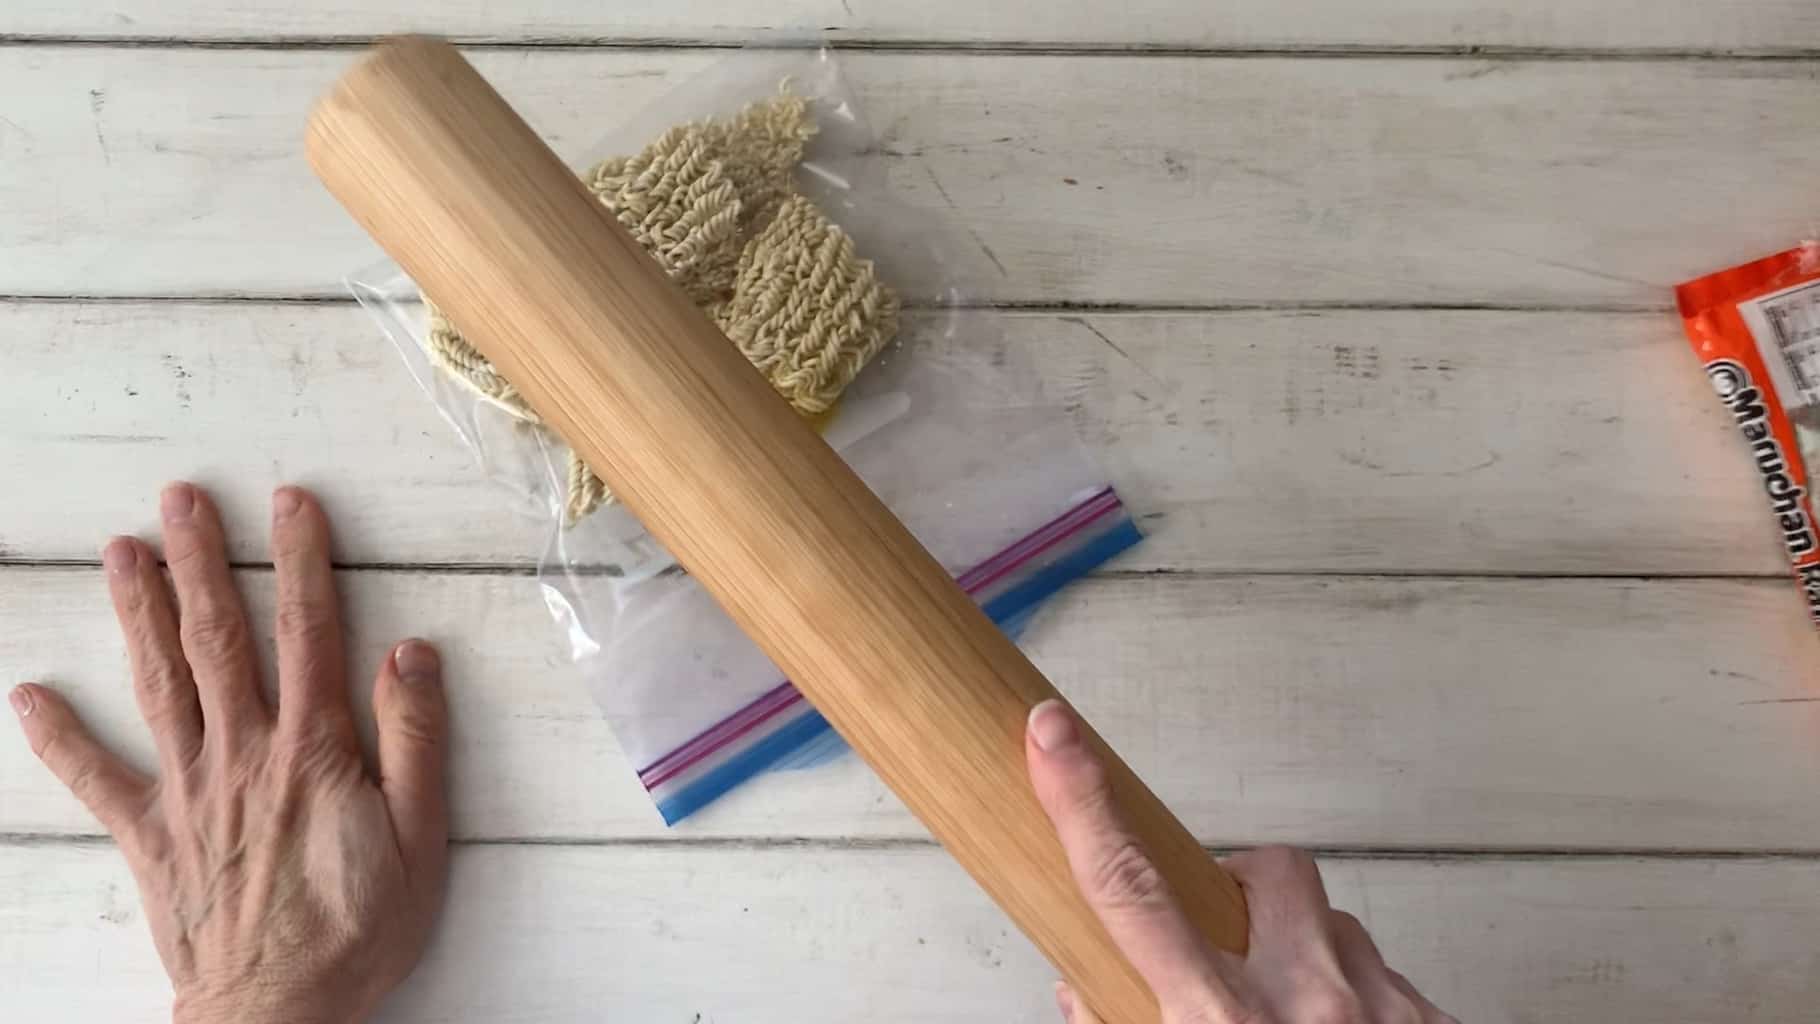 crushing Ramen noodles